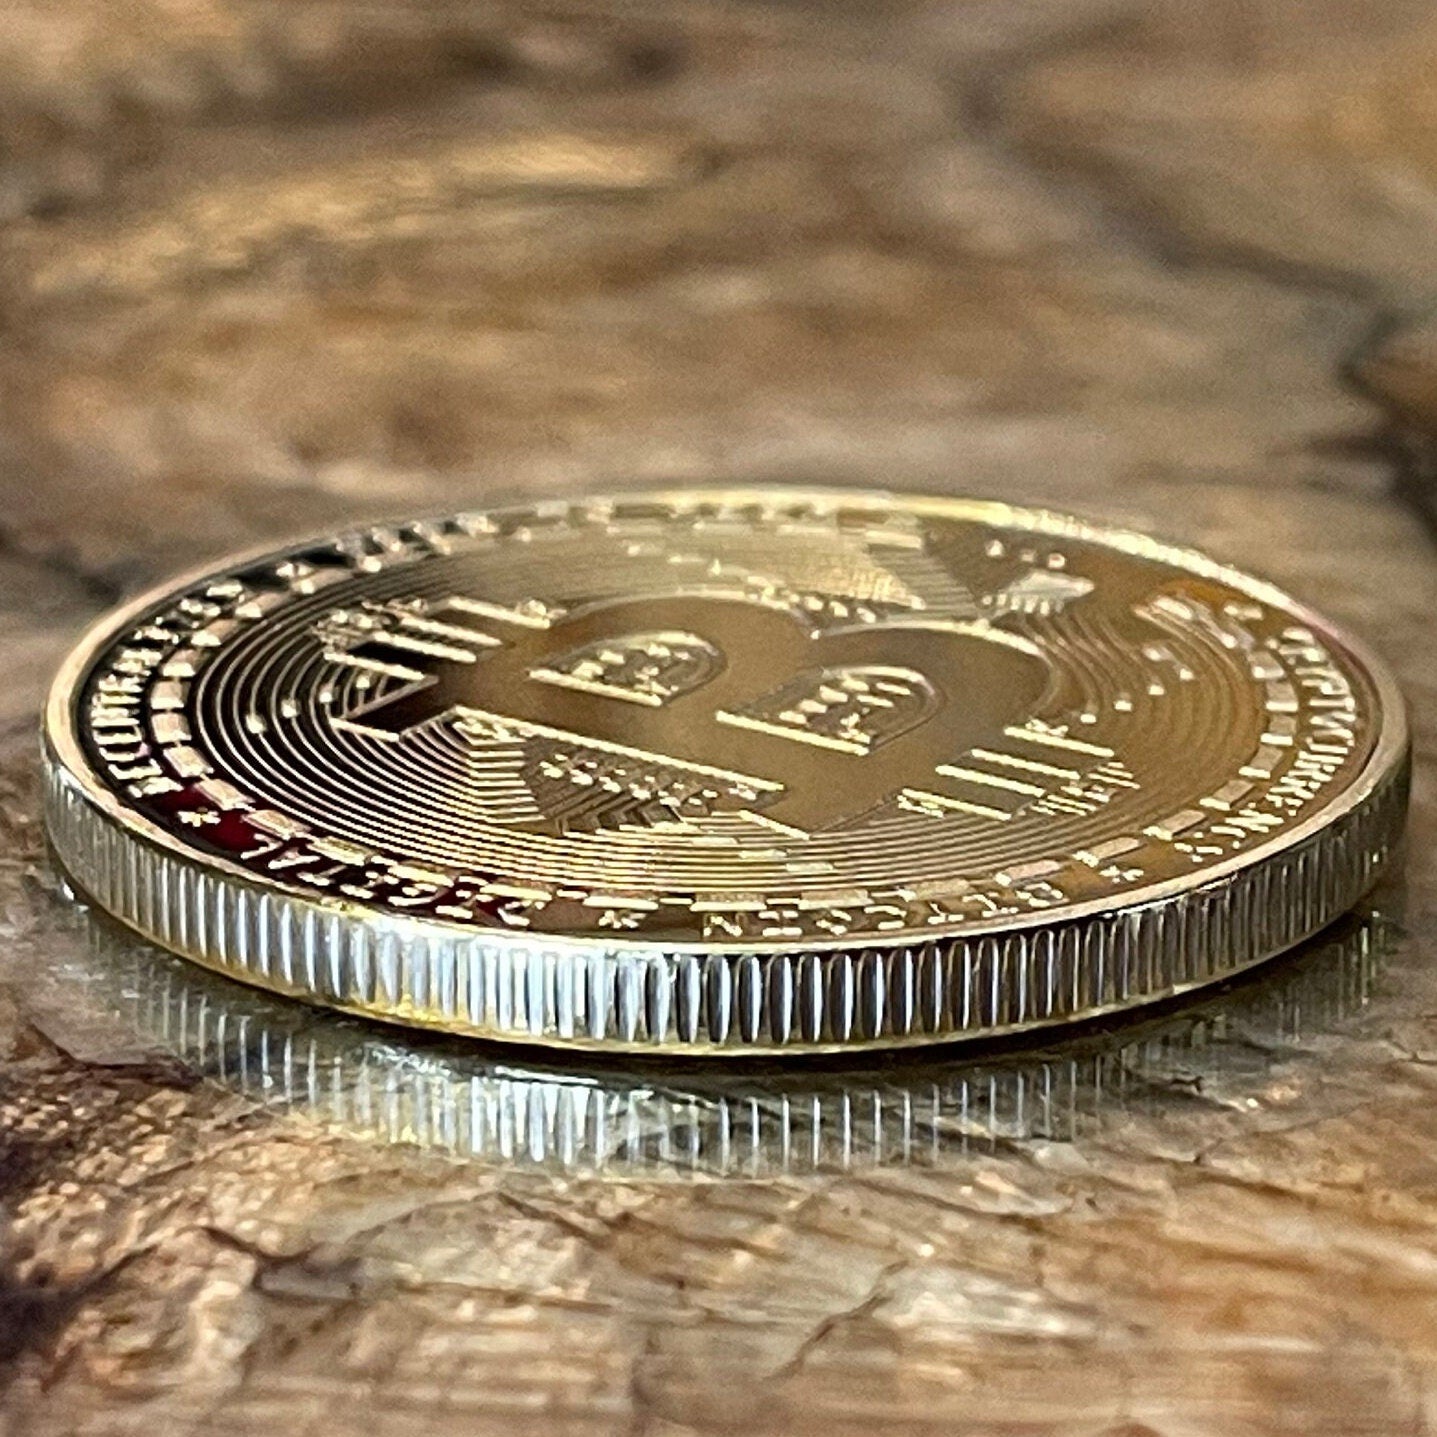 Bitcoin Logo Charm with Miner's Axe & Circuitboard 24-Karat Gold-plated Novelty Medallion (No Monetary Value) (Cryptocurrency) (BTC Mining)